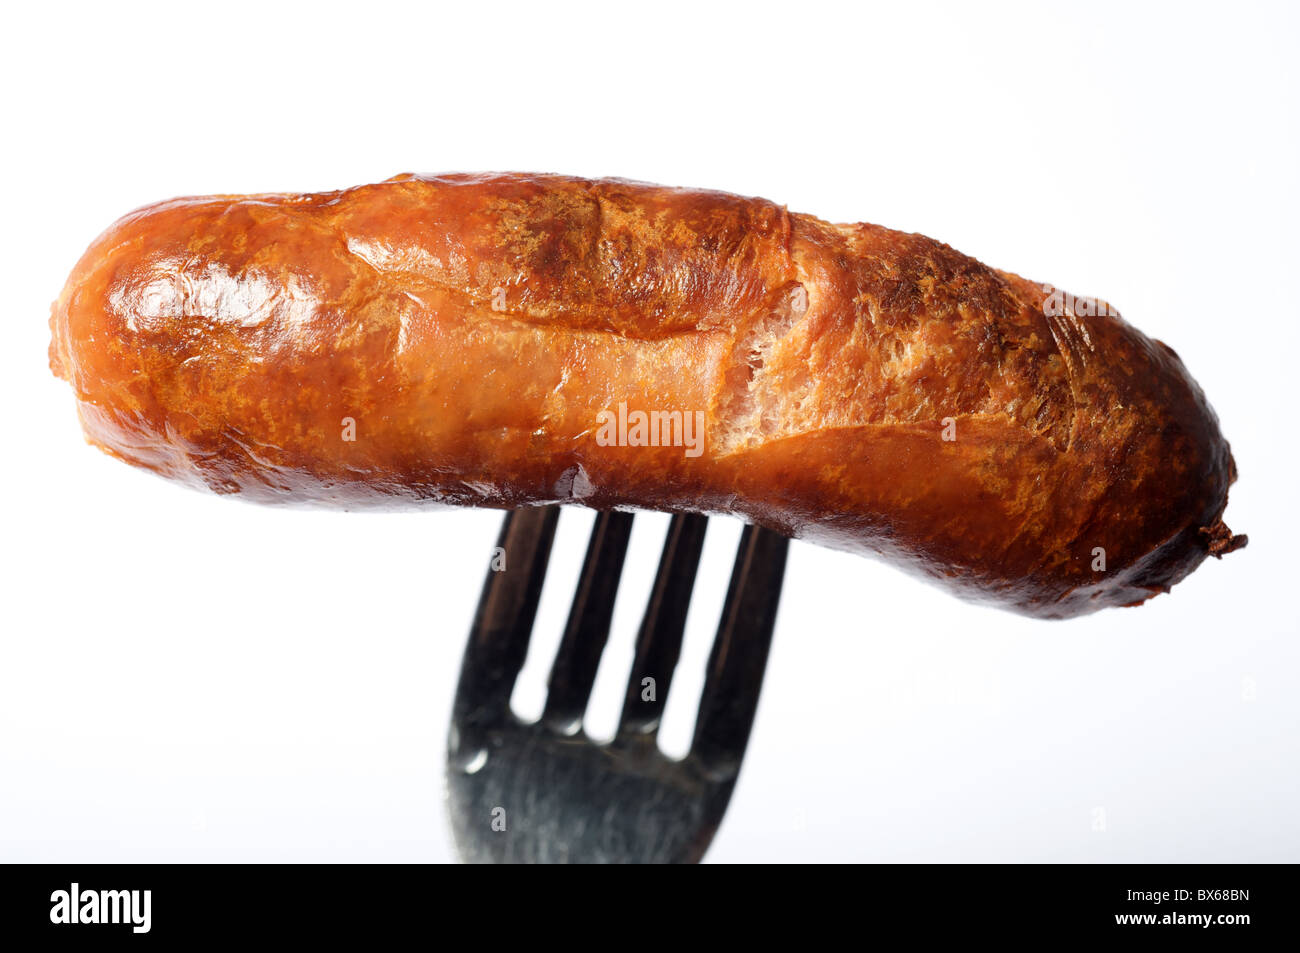 Grilled pork sausage Stock Photo